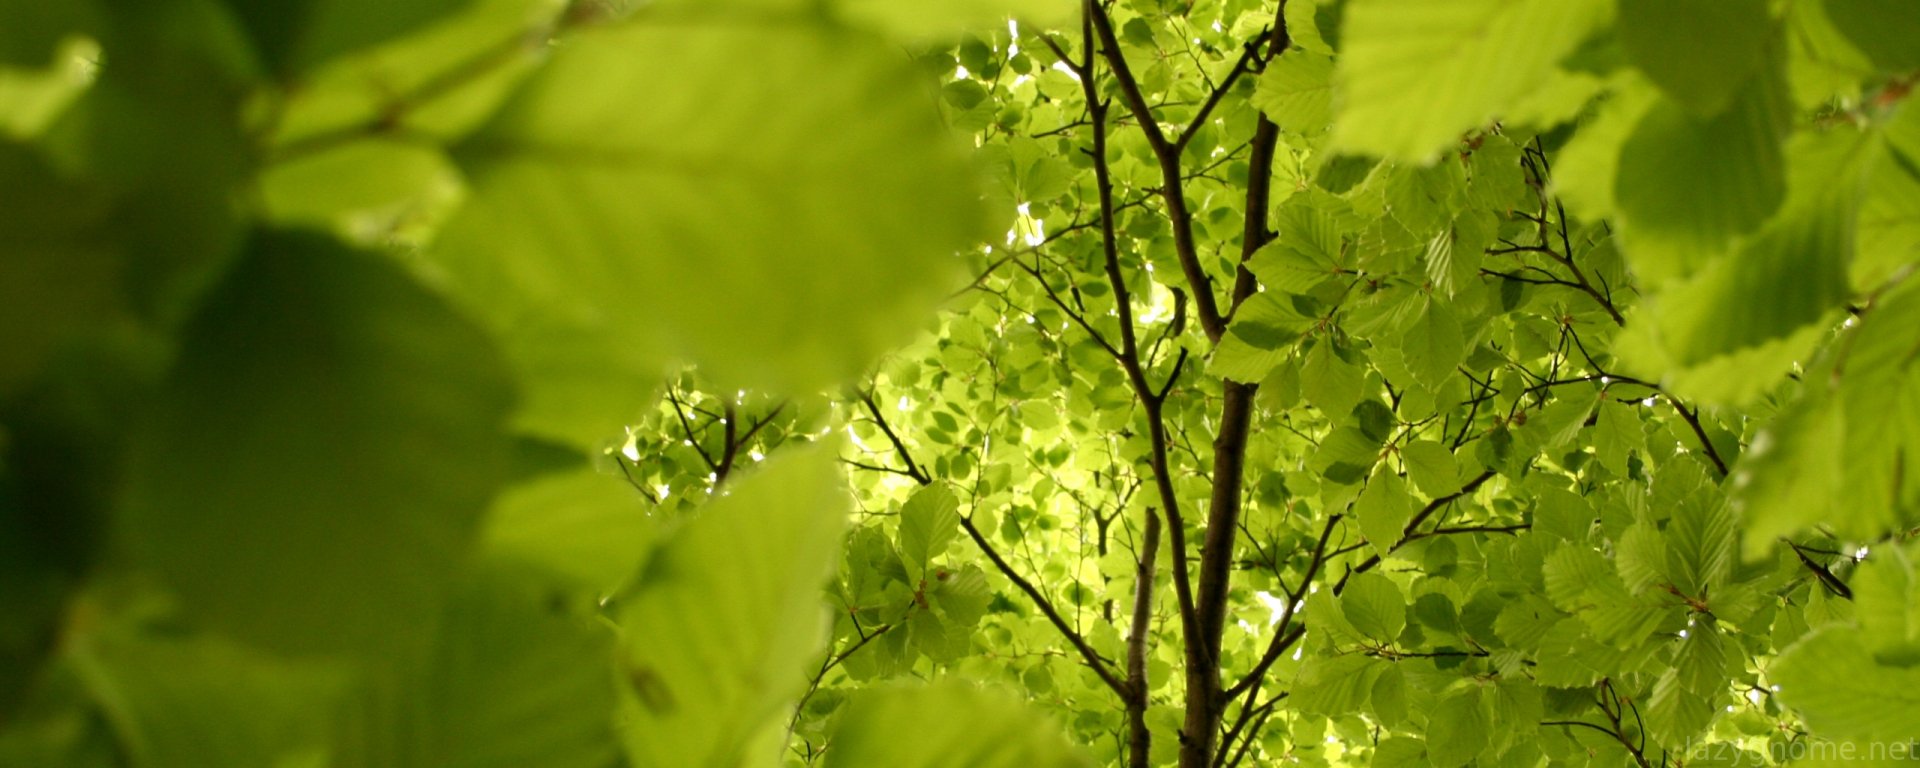 Download Tree Branch Nature Leaf  Wallpaper